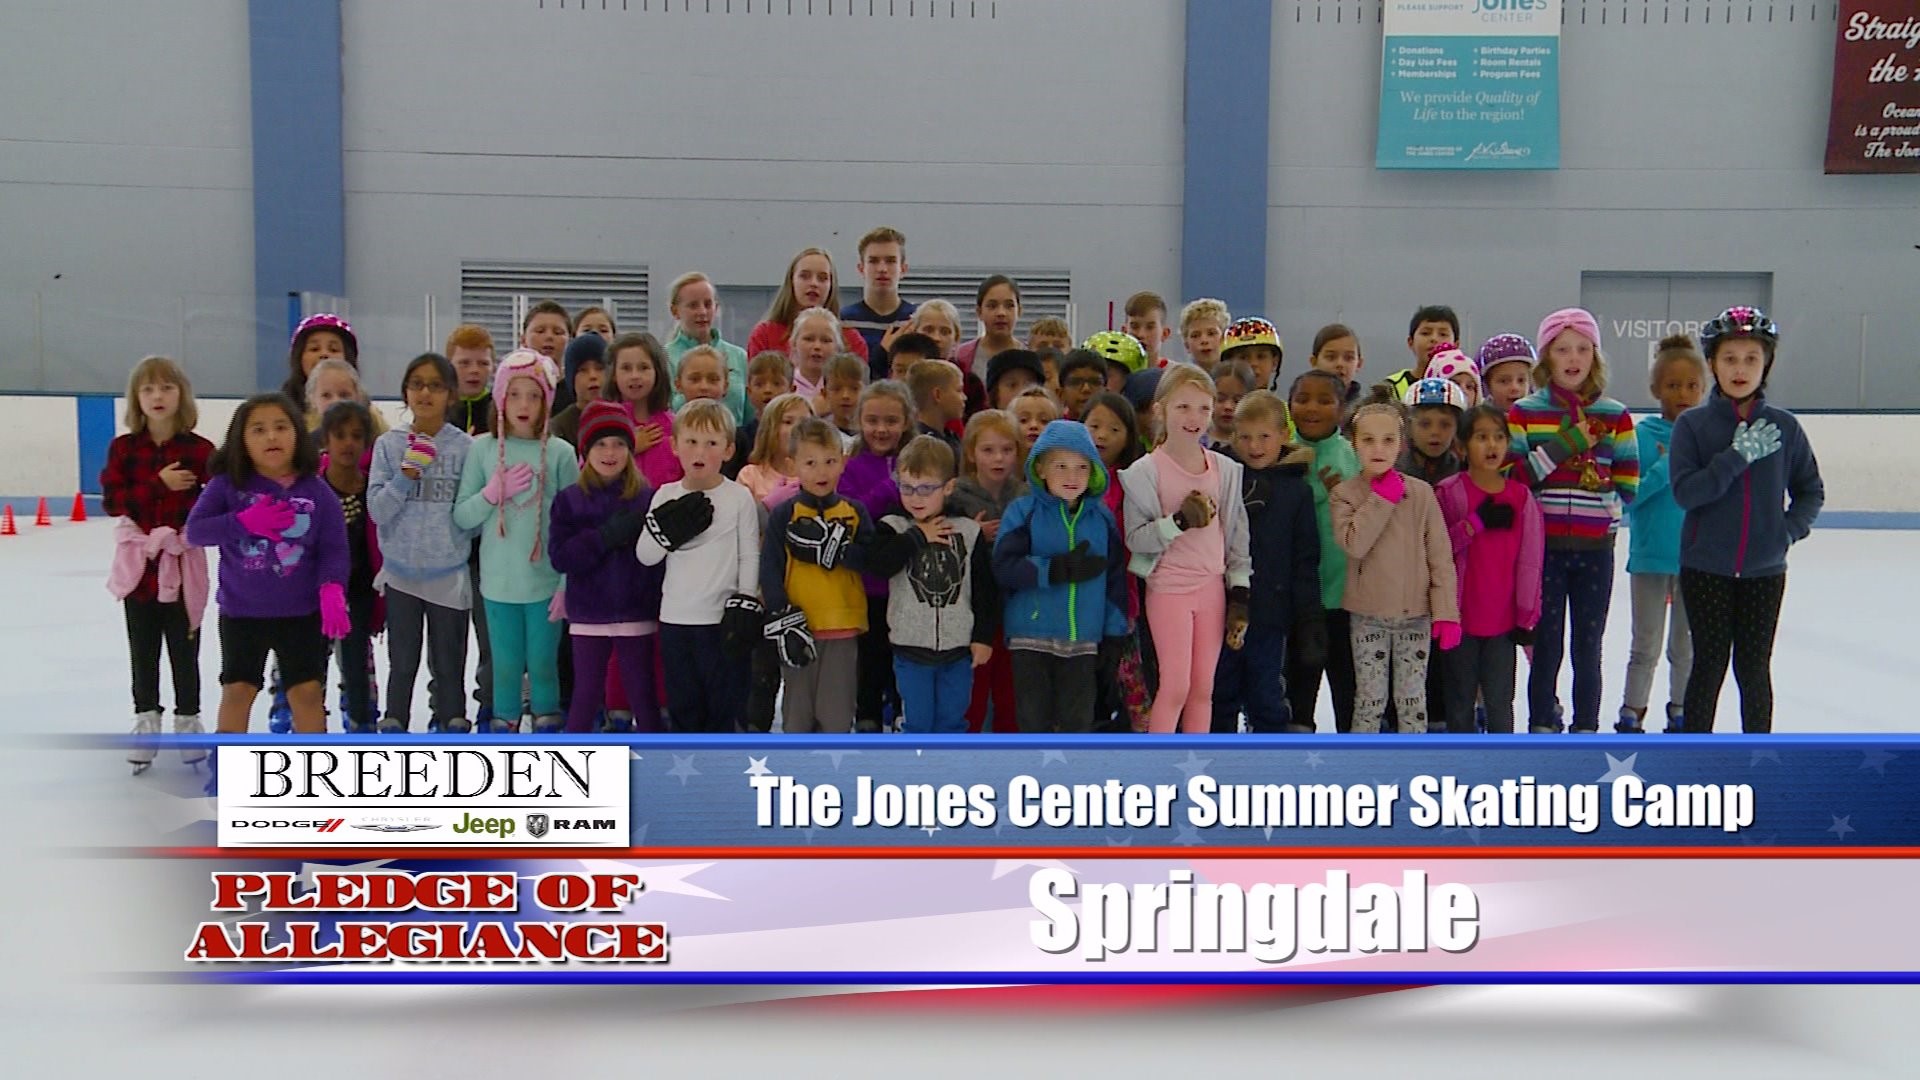 The Jones Center Summer Skating Camp in Springdale